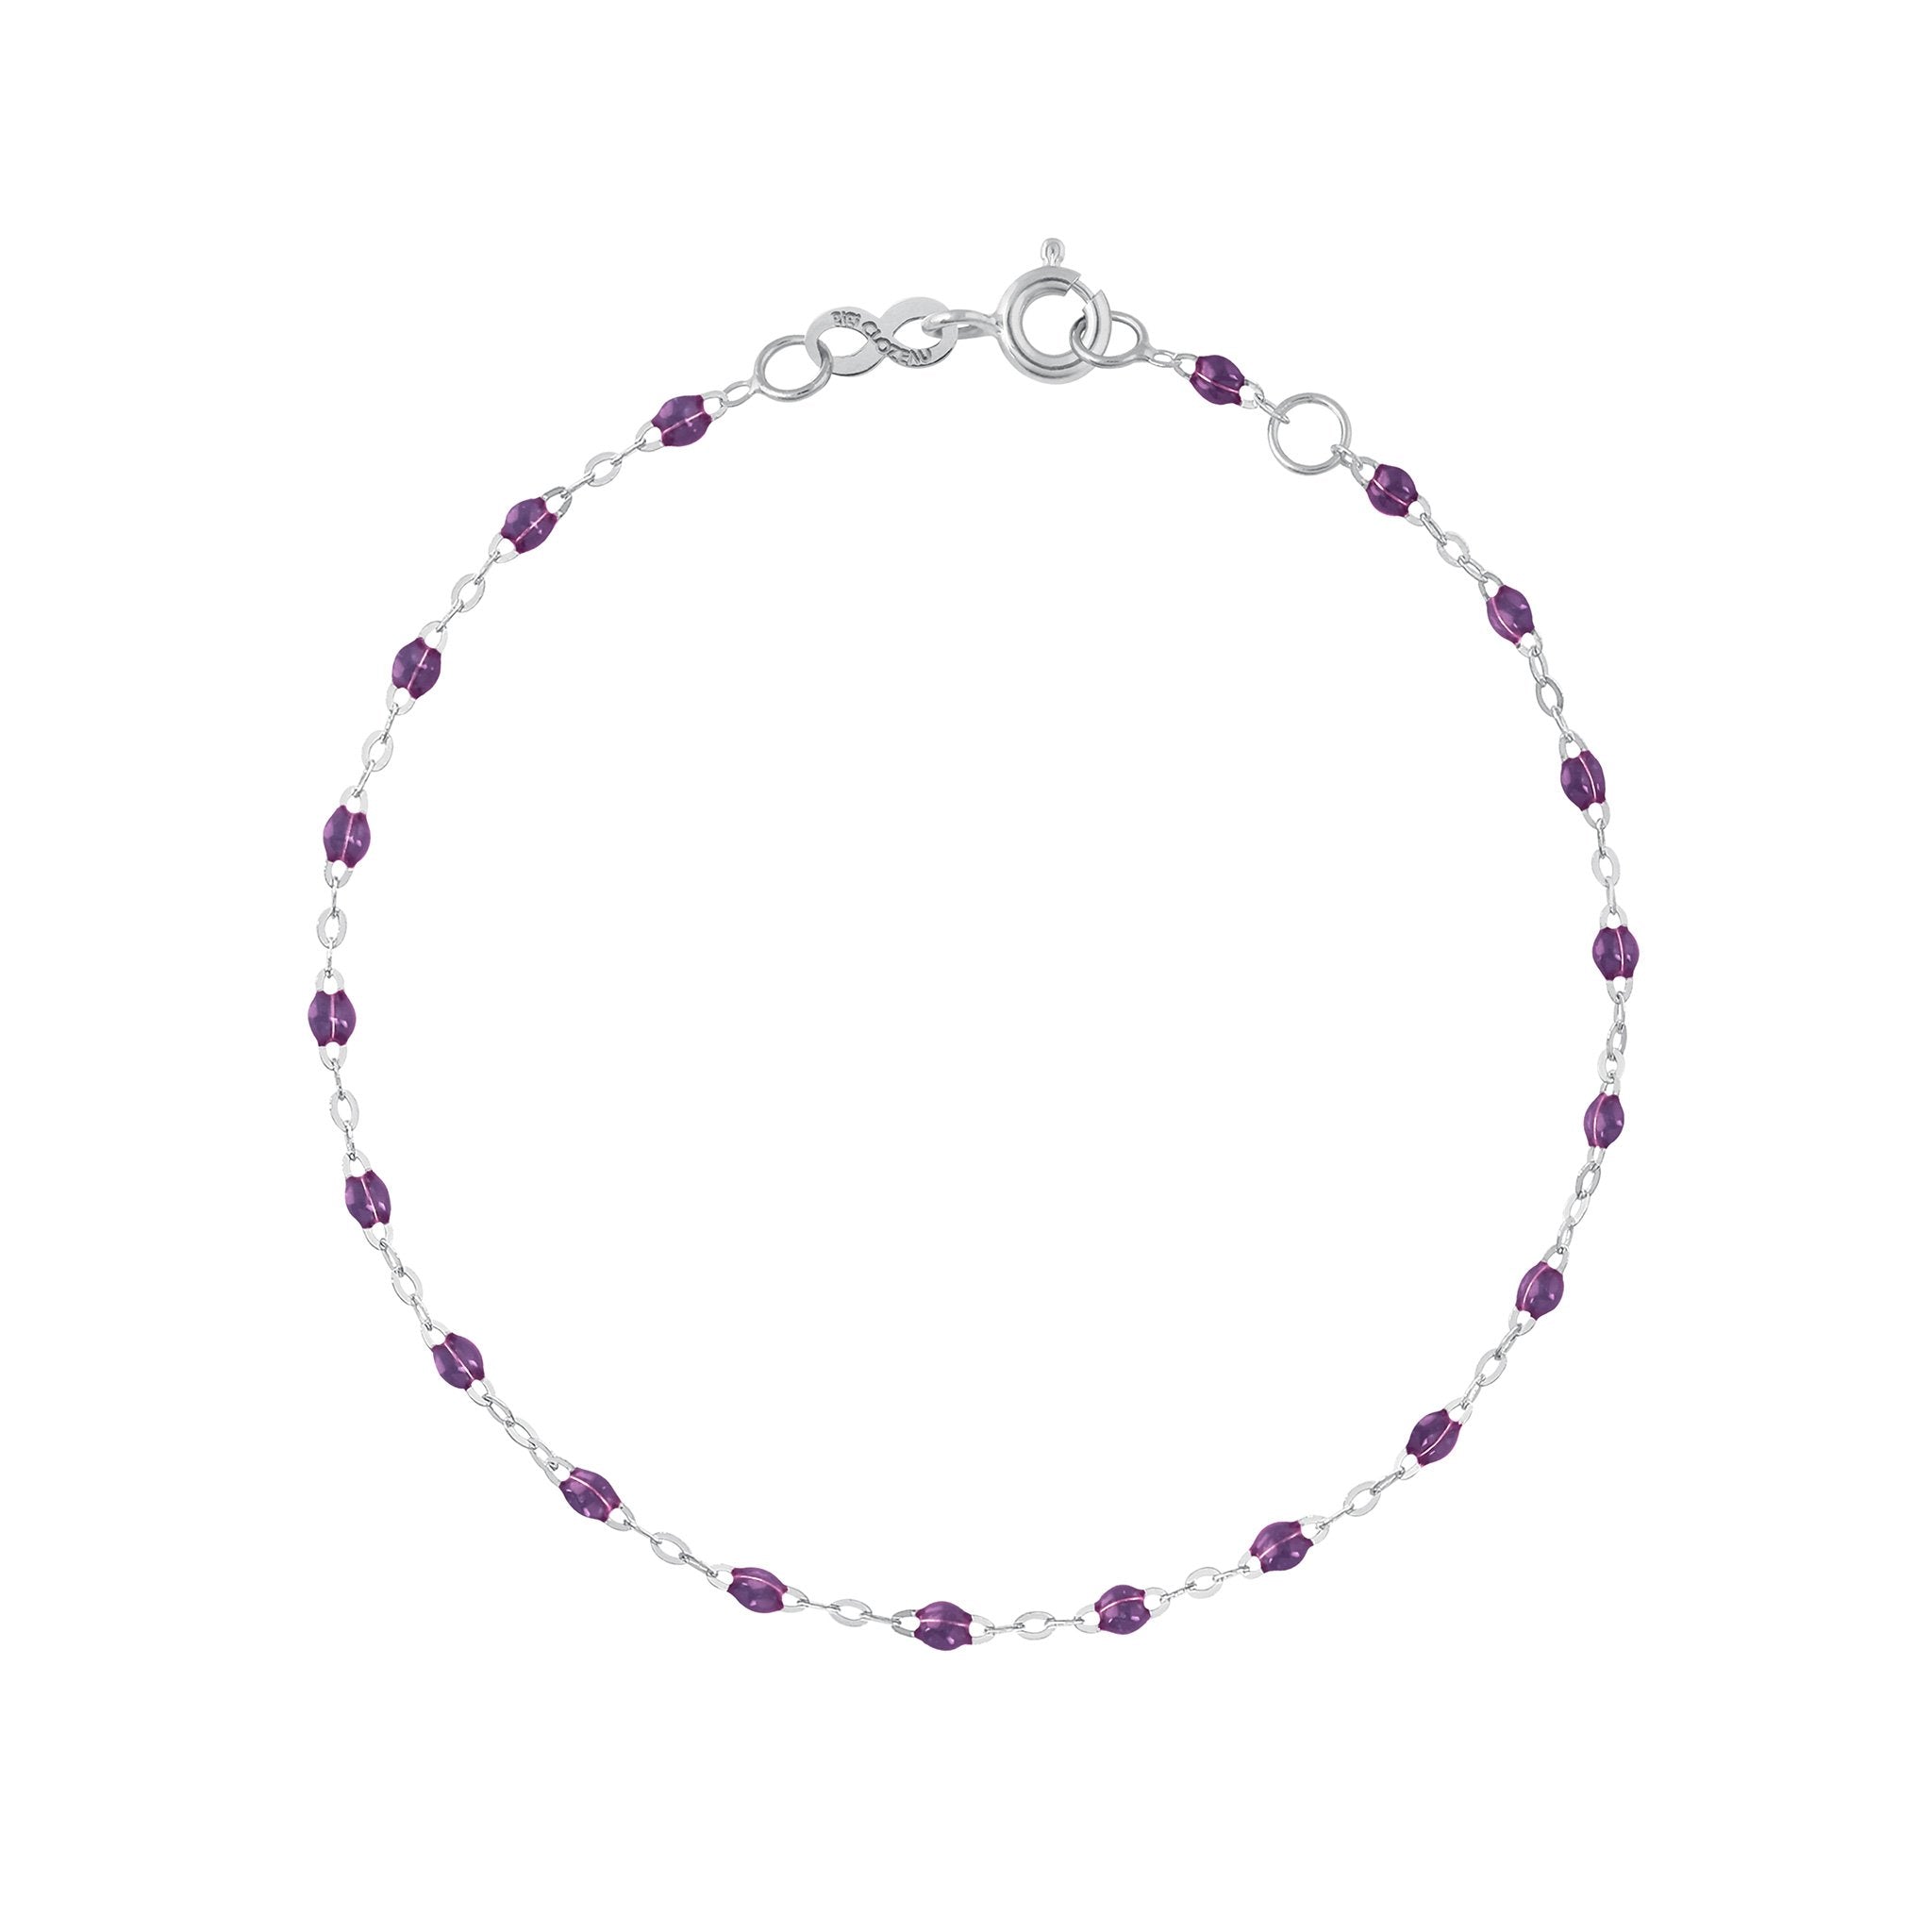 Bracelet violet Classique Gigi, or blanc, 15 cm classique gigi Référence :  b3gi001g1115xx -1